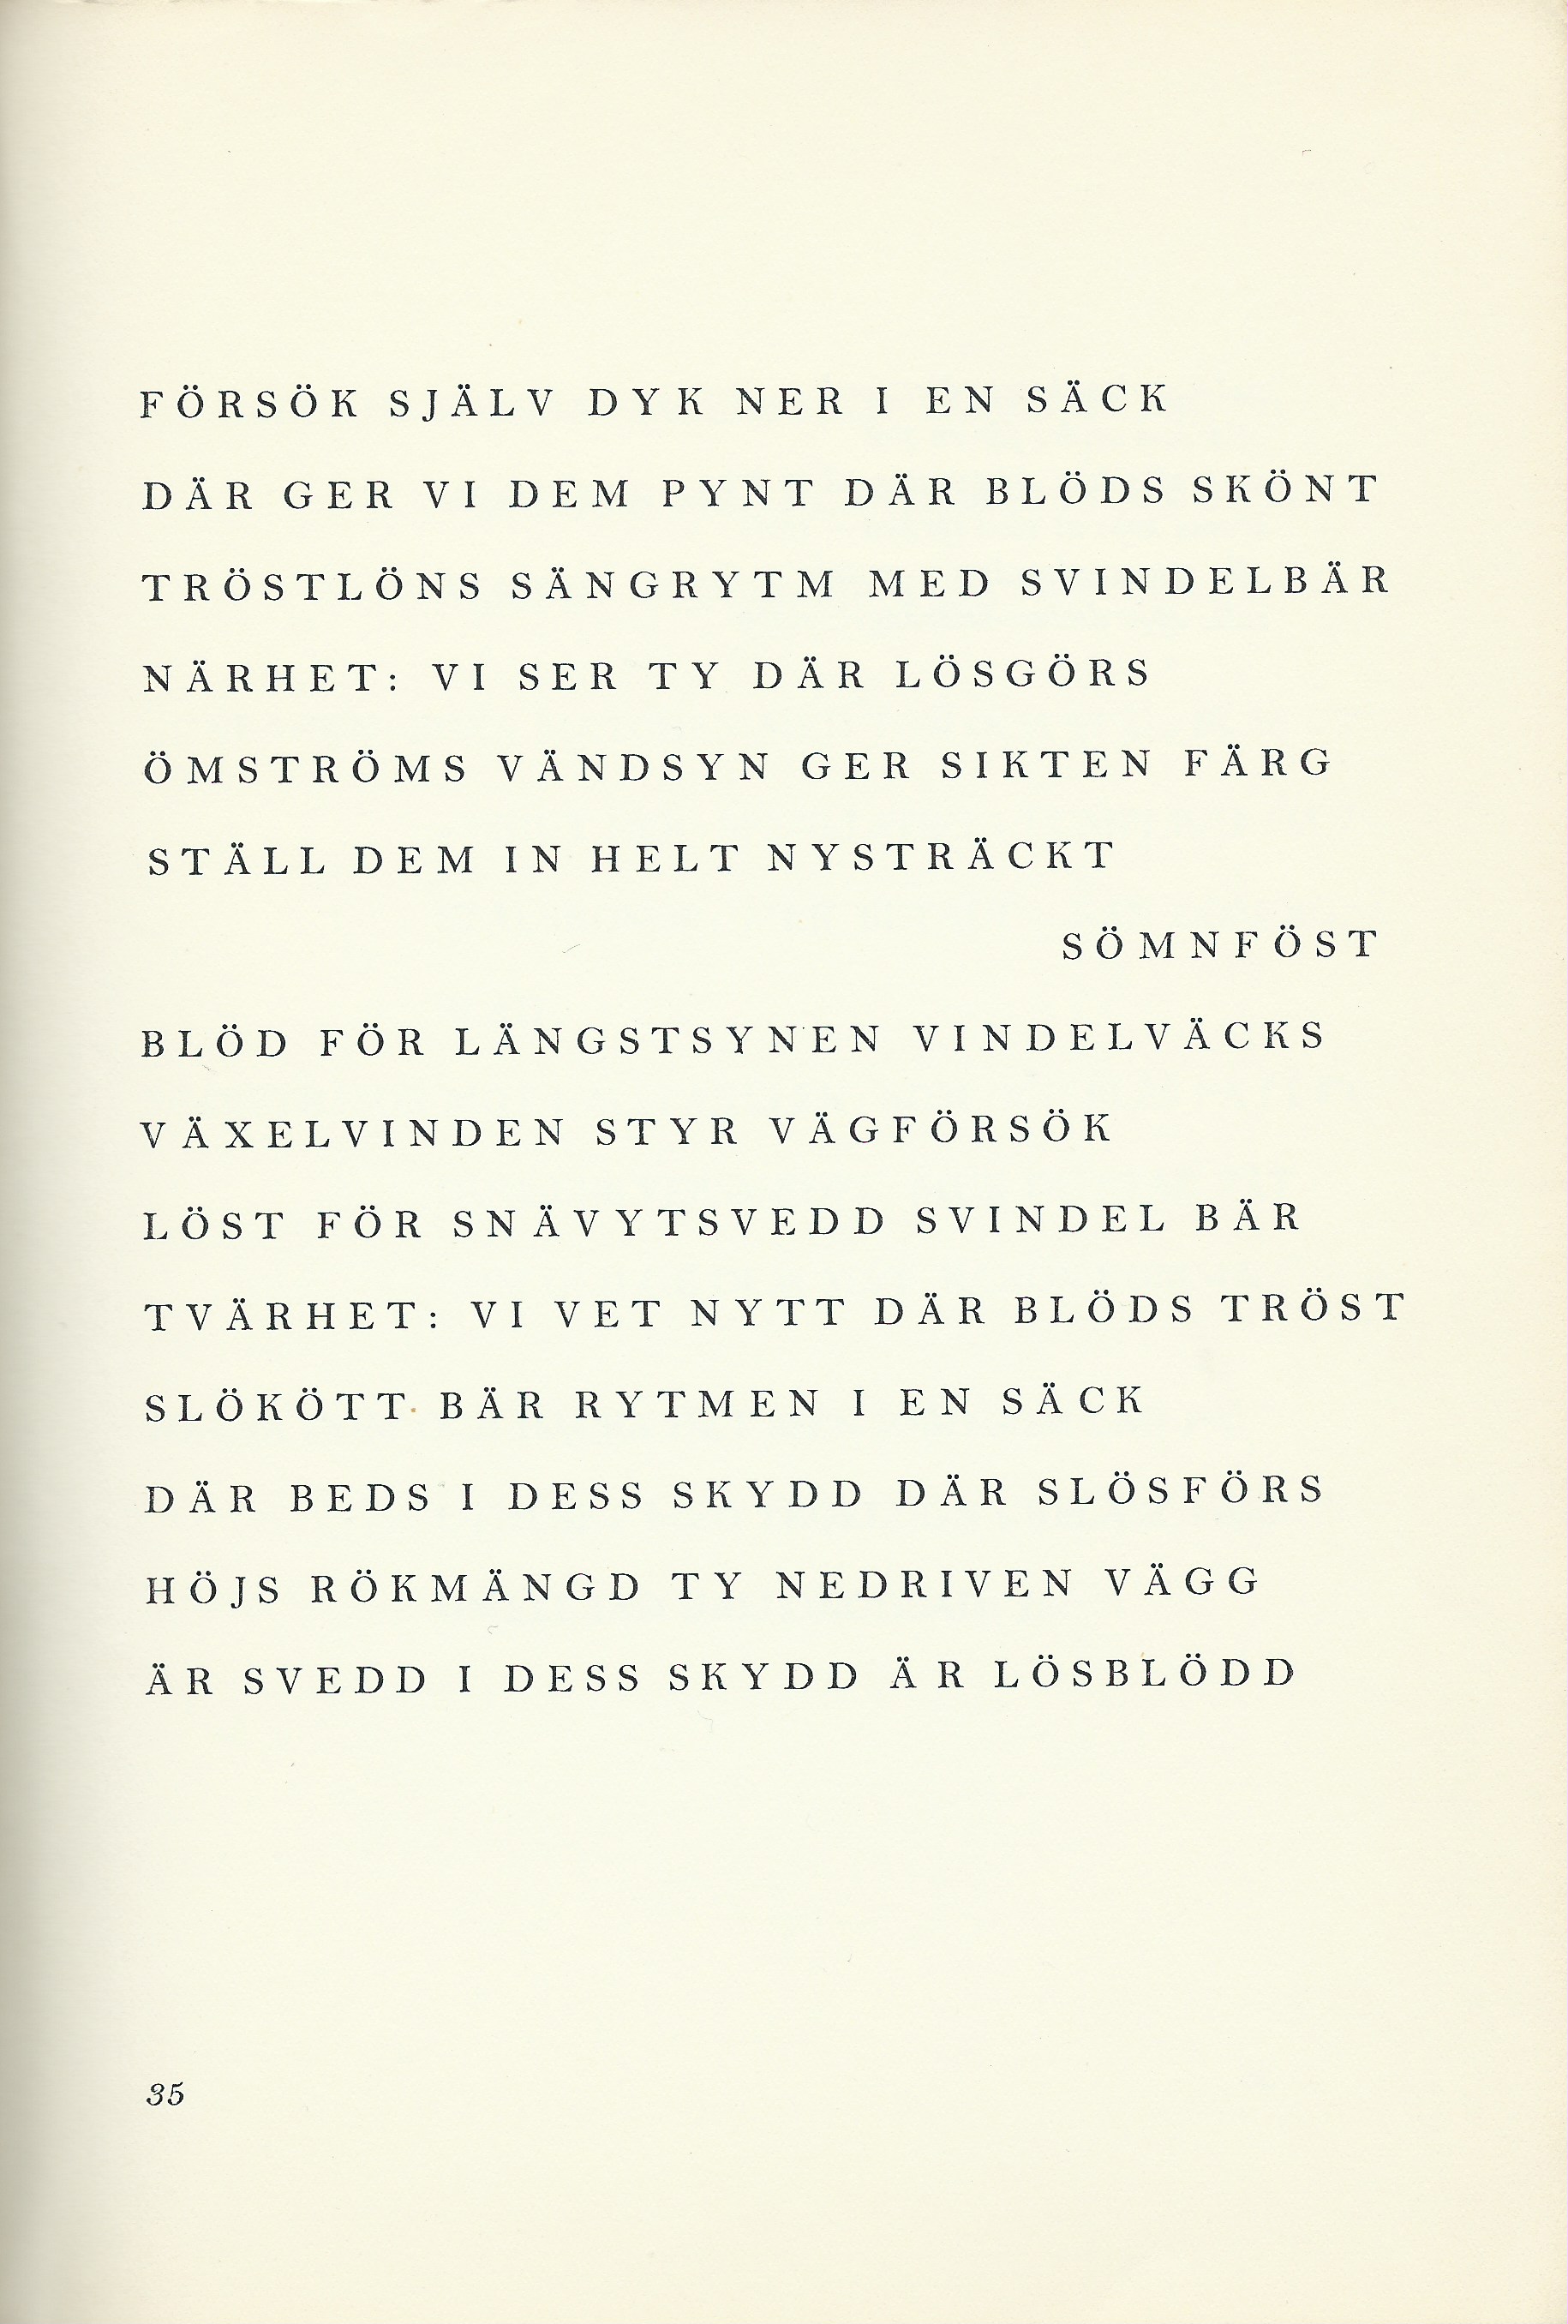 From Bengt Emil Johnson, Hyllningarna (The Tributes) (1963).